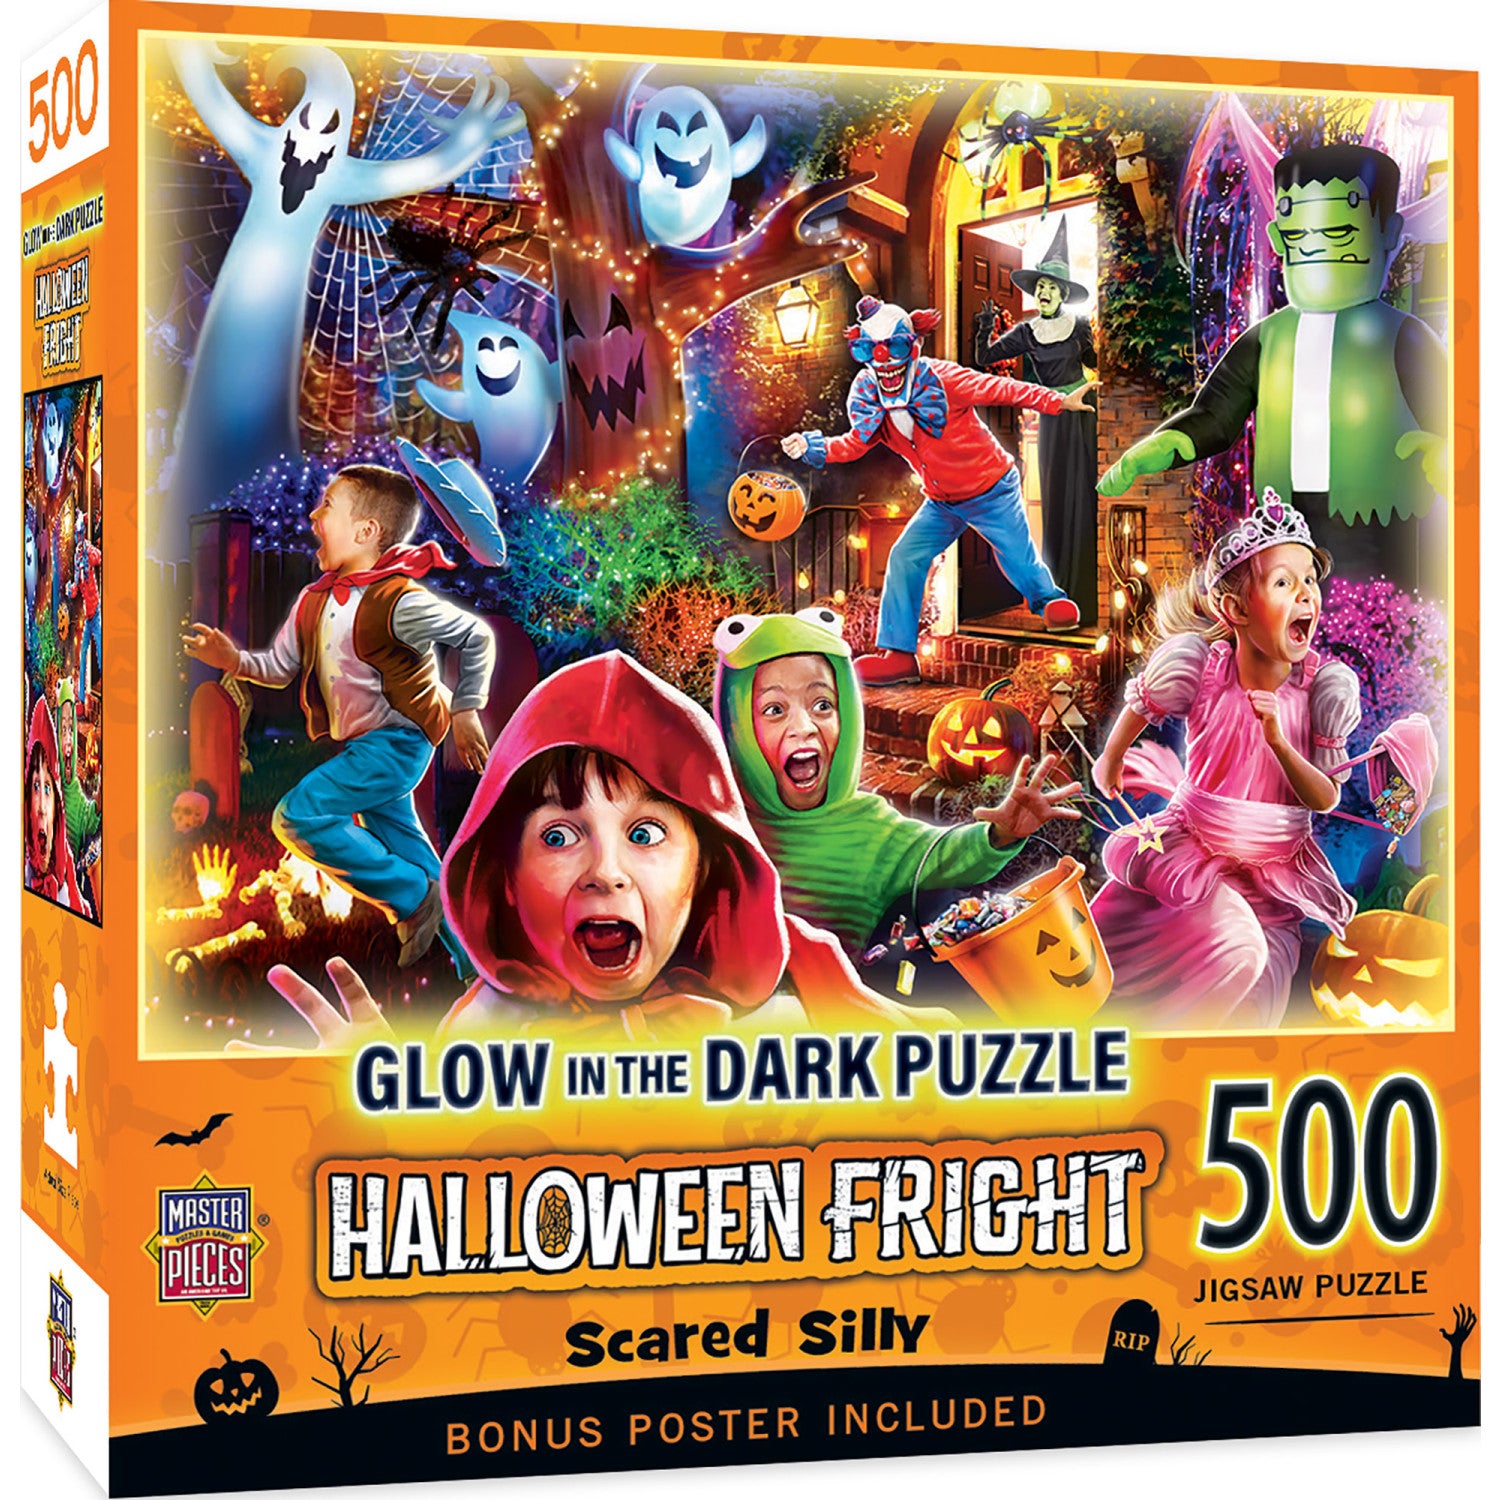 Glow in the Dark - Scared Silly 500 Piece Jigsaw Puzzle